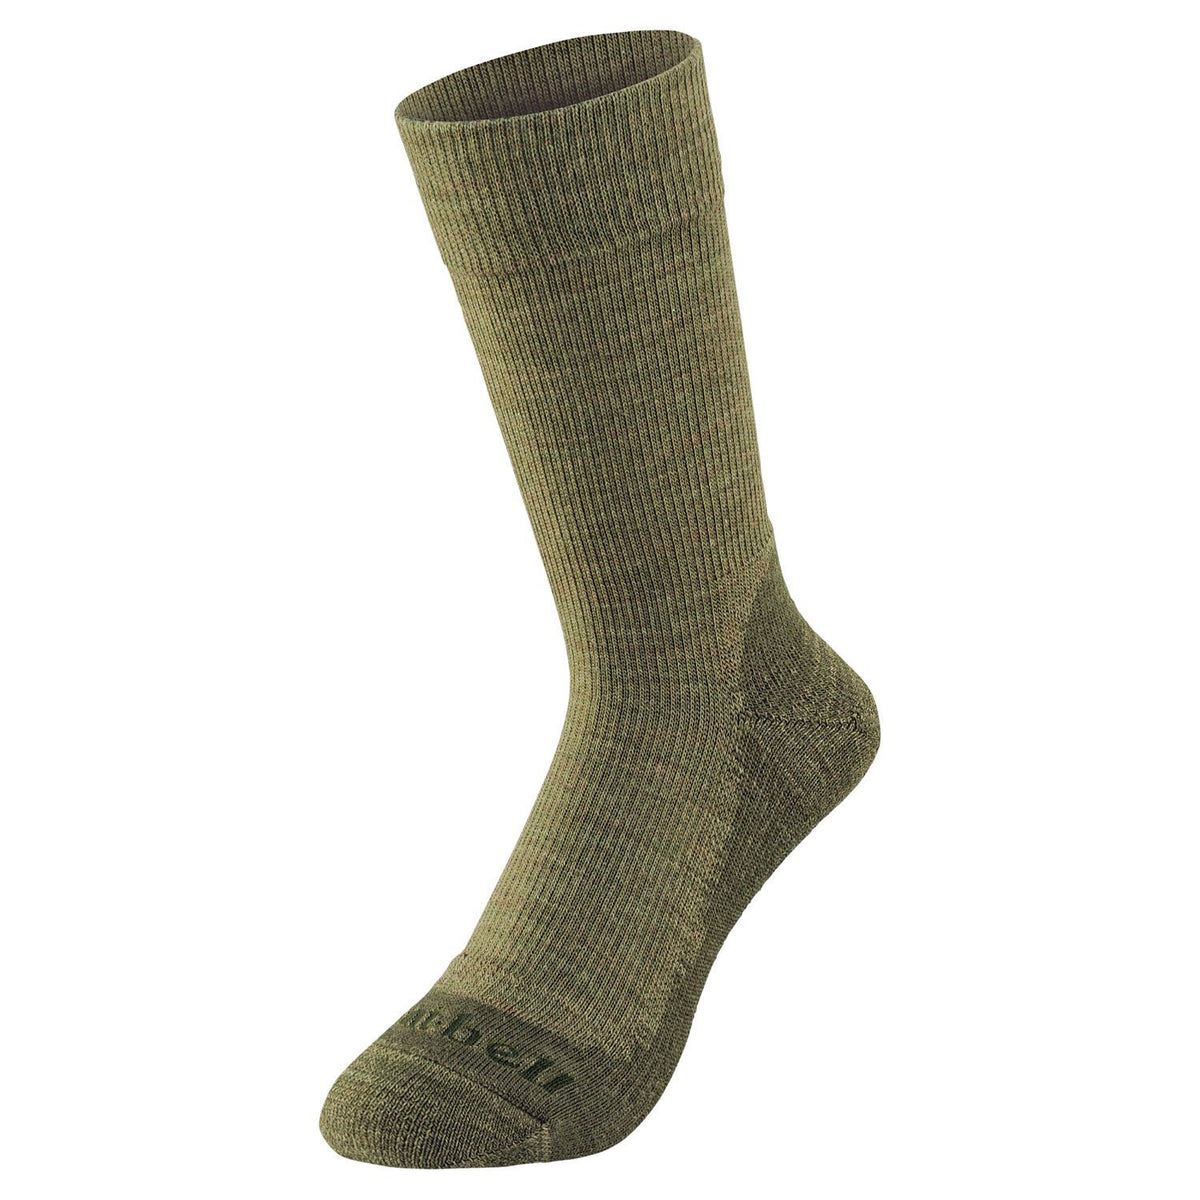 Montbell Merino Wool Walking Socks